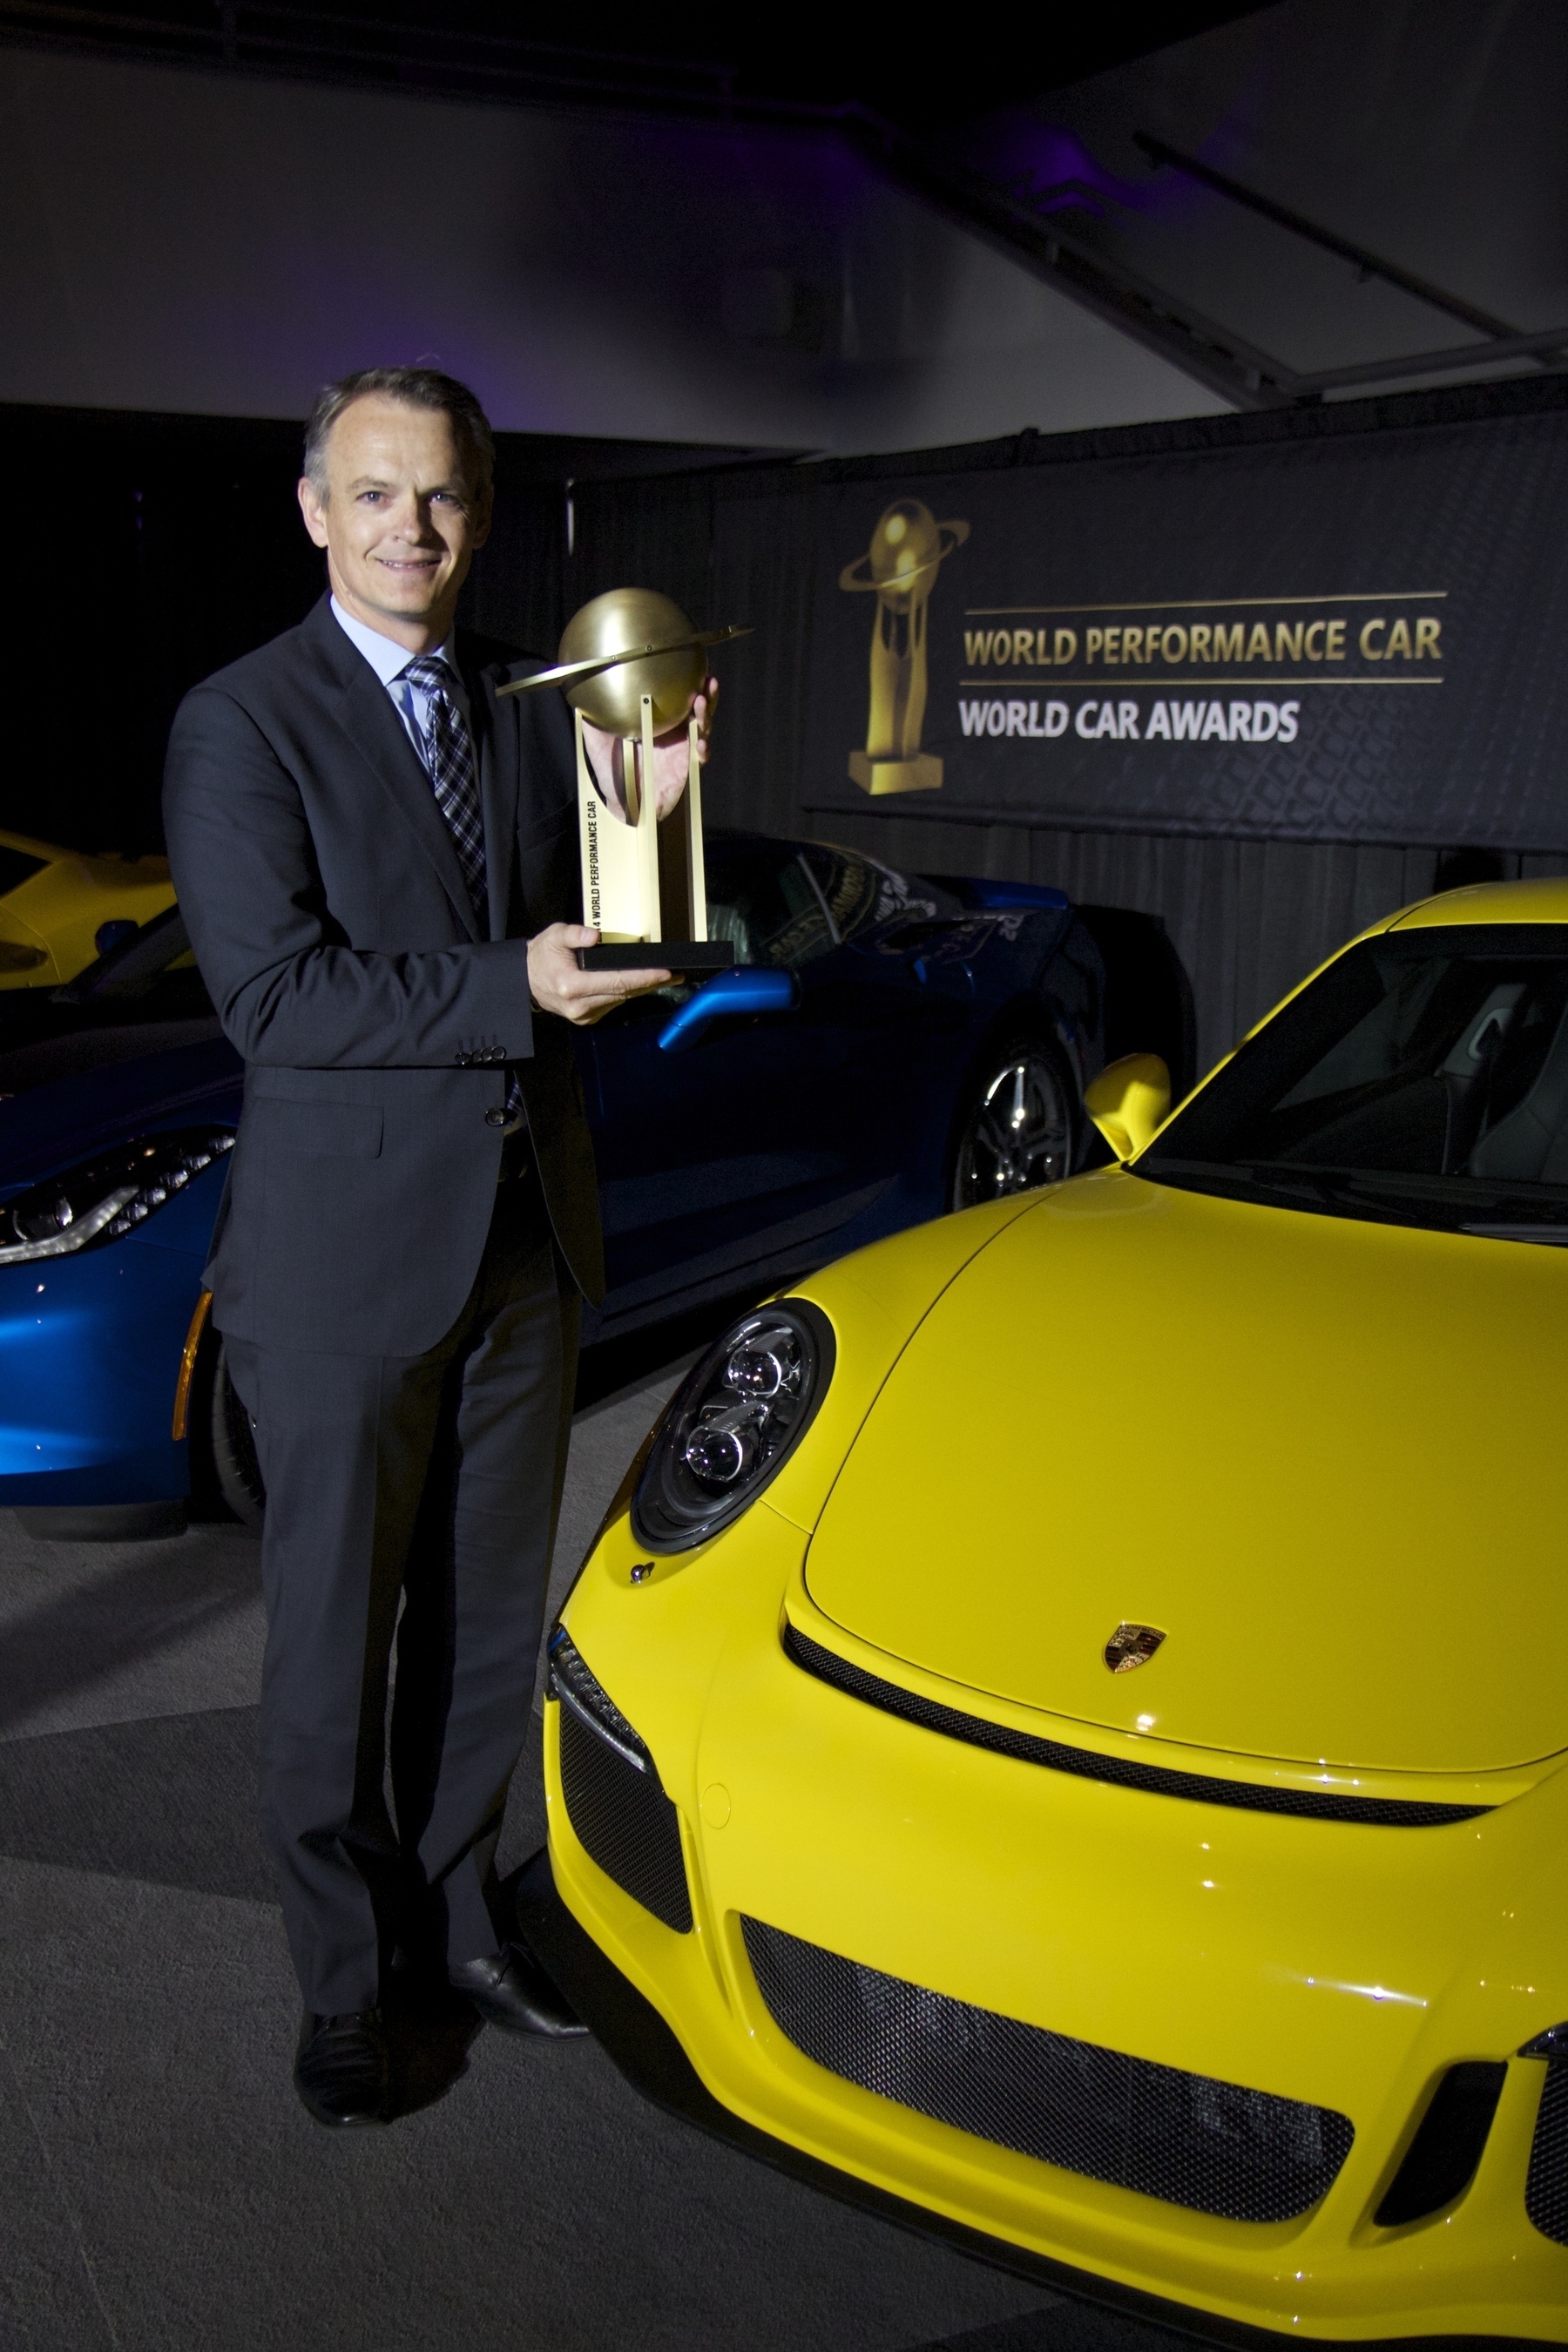 Porsche 911 GT3 named 2014 World Performance Car (PRNewsFoto/Porsche Cars North America)